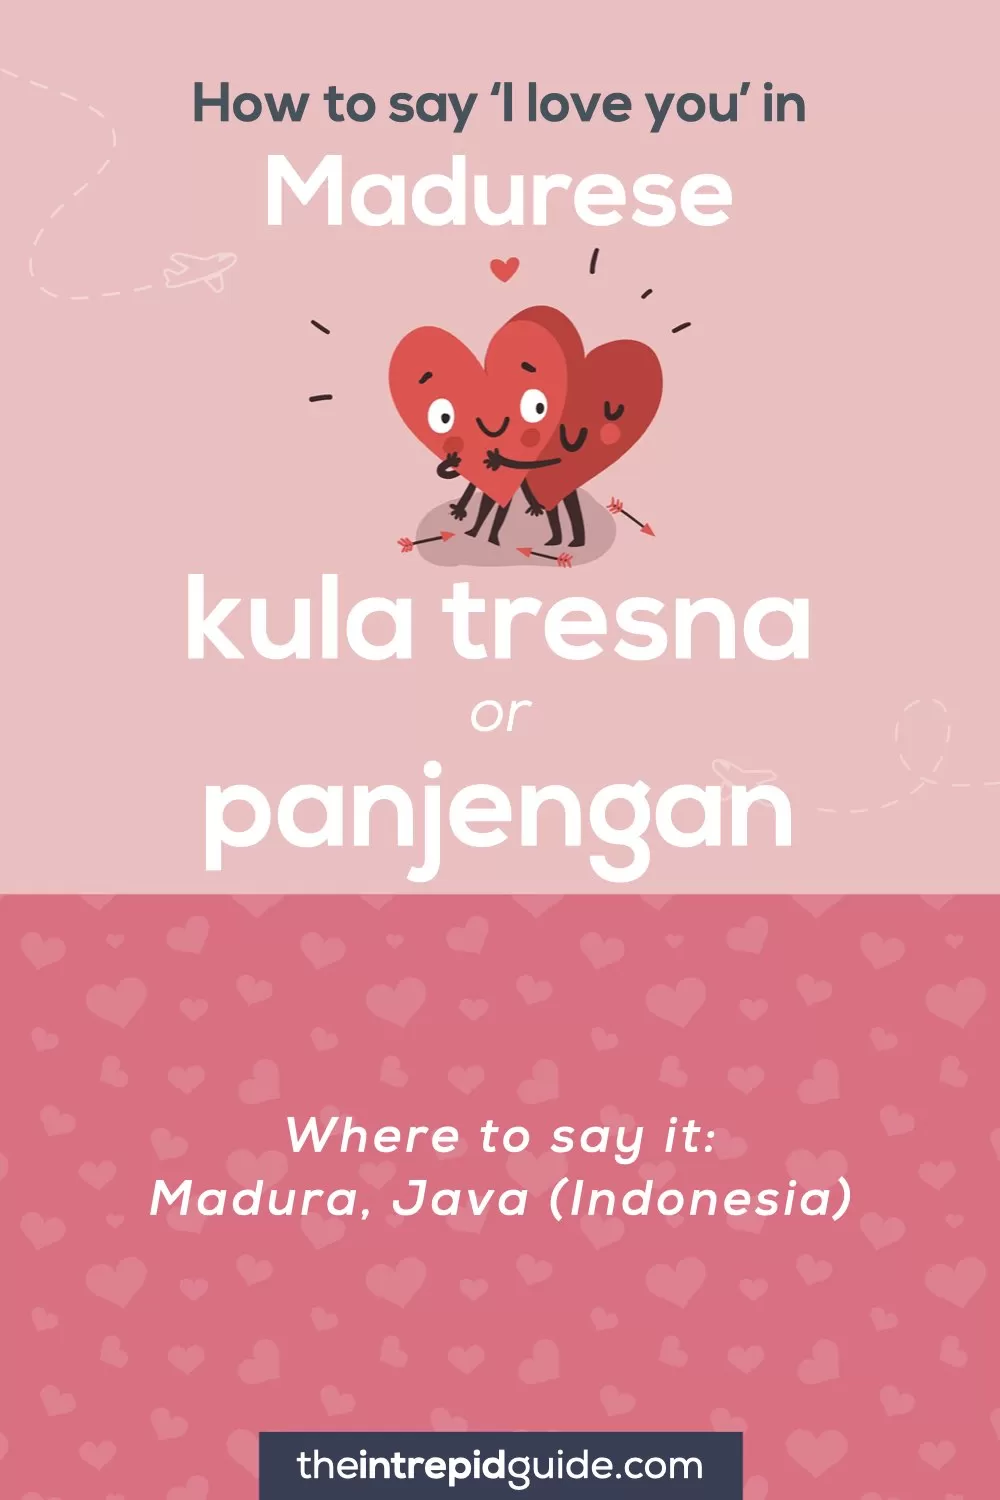 How to say I love you in different languages - Madurese - kula tresna :- panjengan